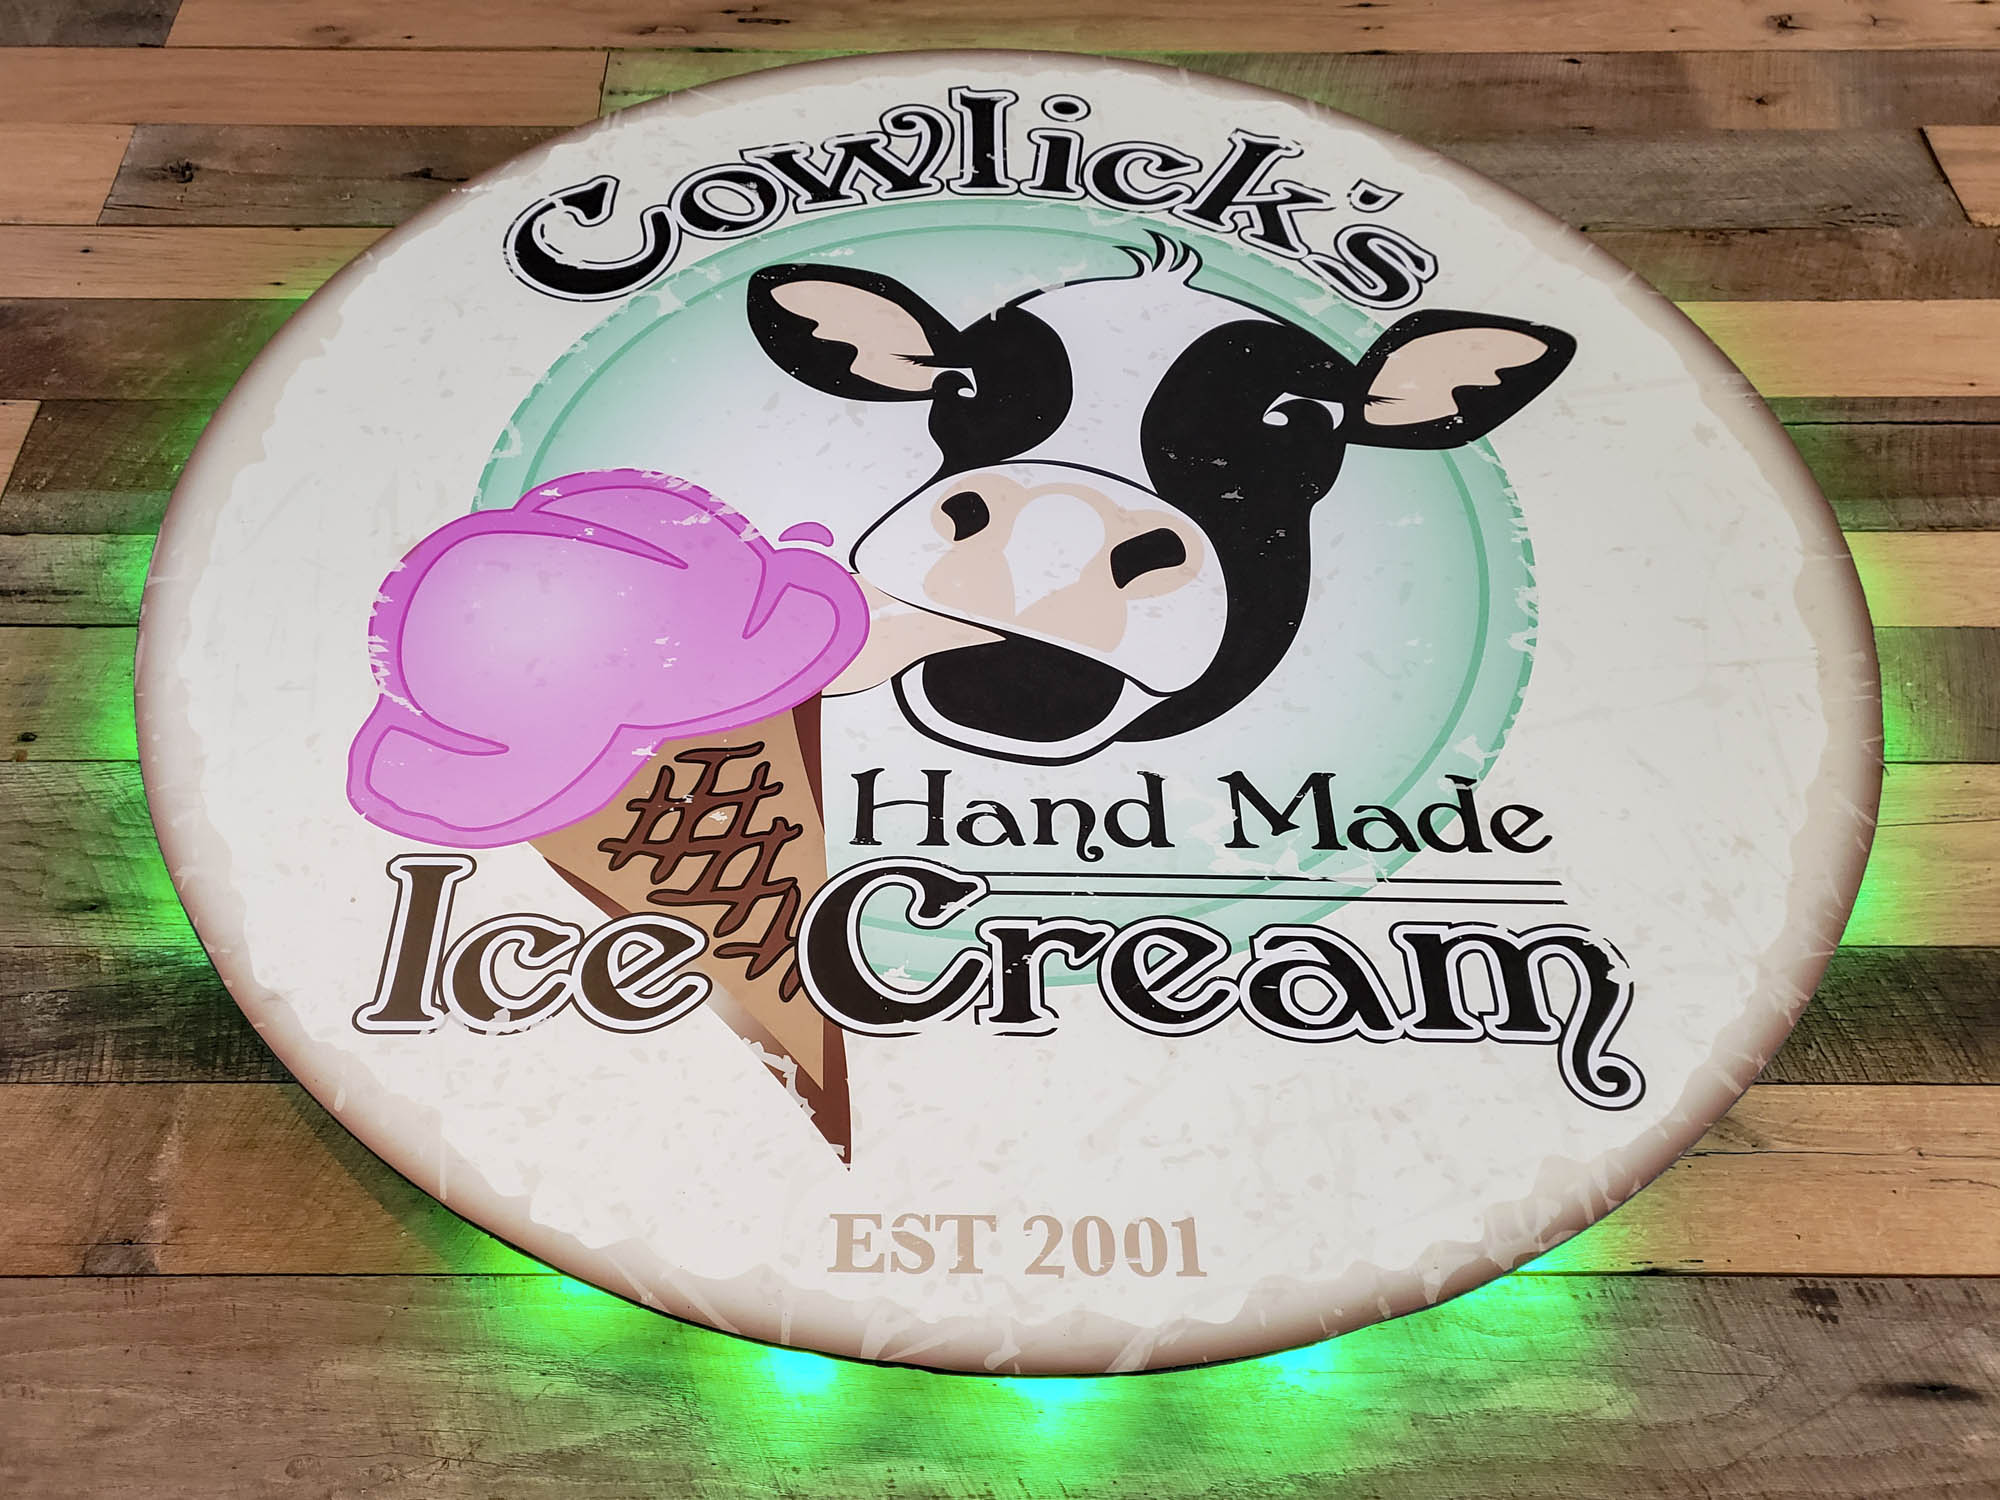 Cowlick's Ice Cream